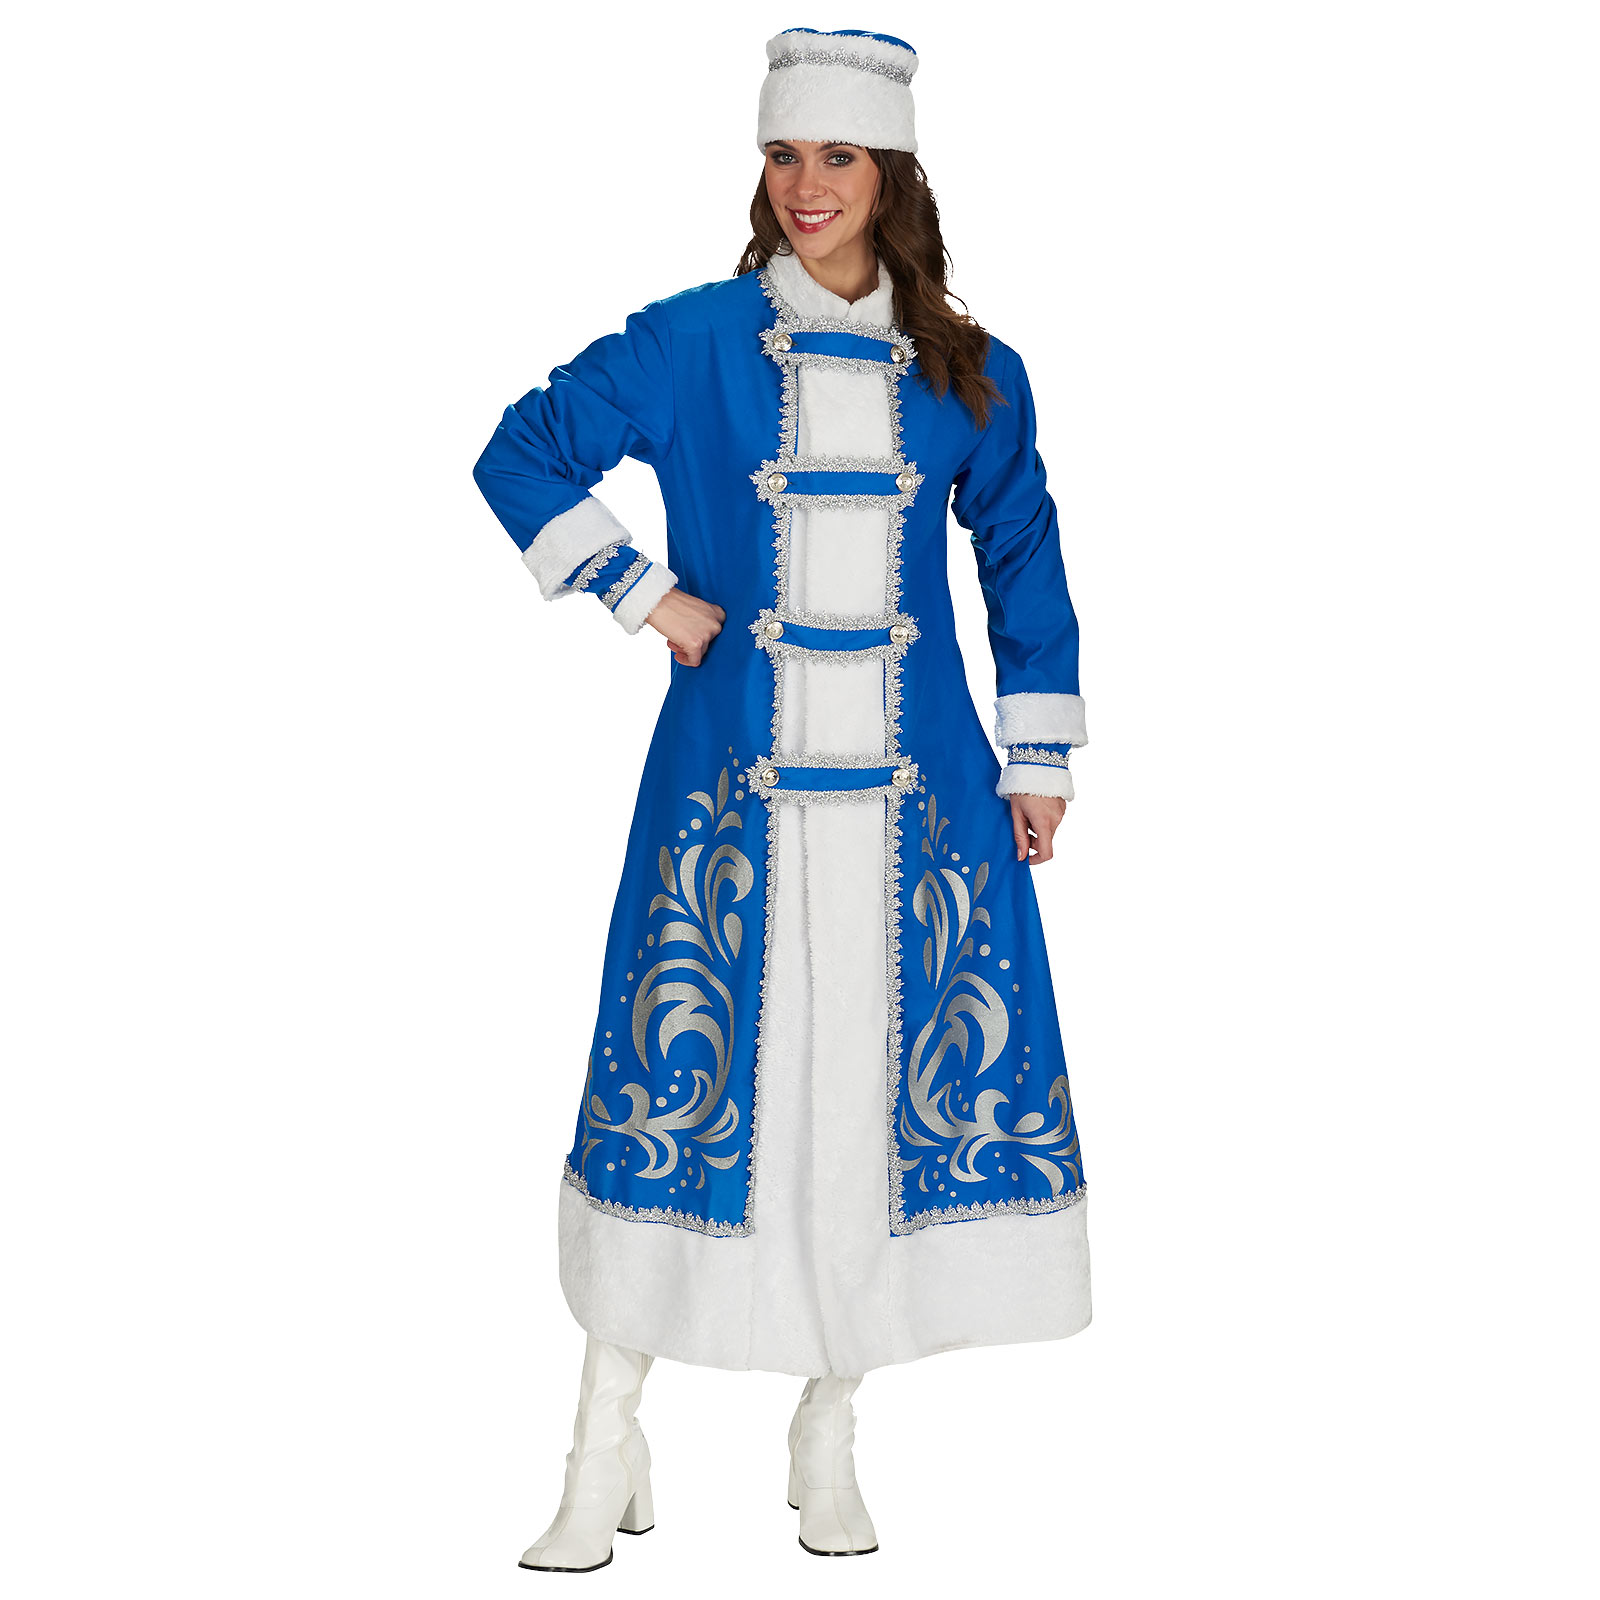 Zarin Mantel mit Mütze - Kostüm